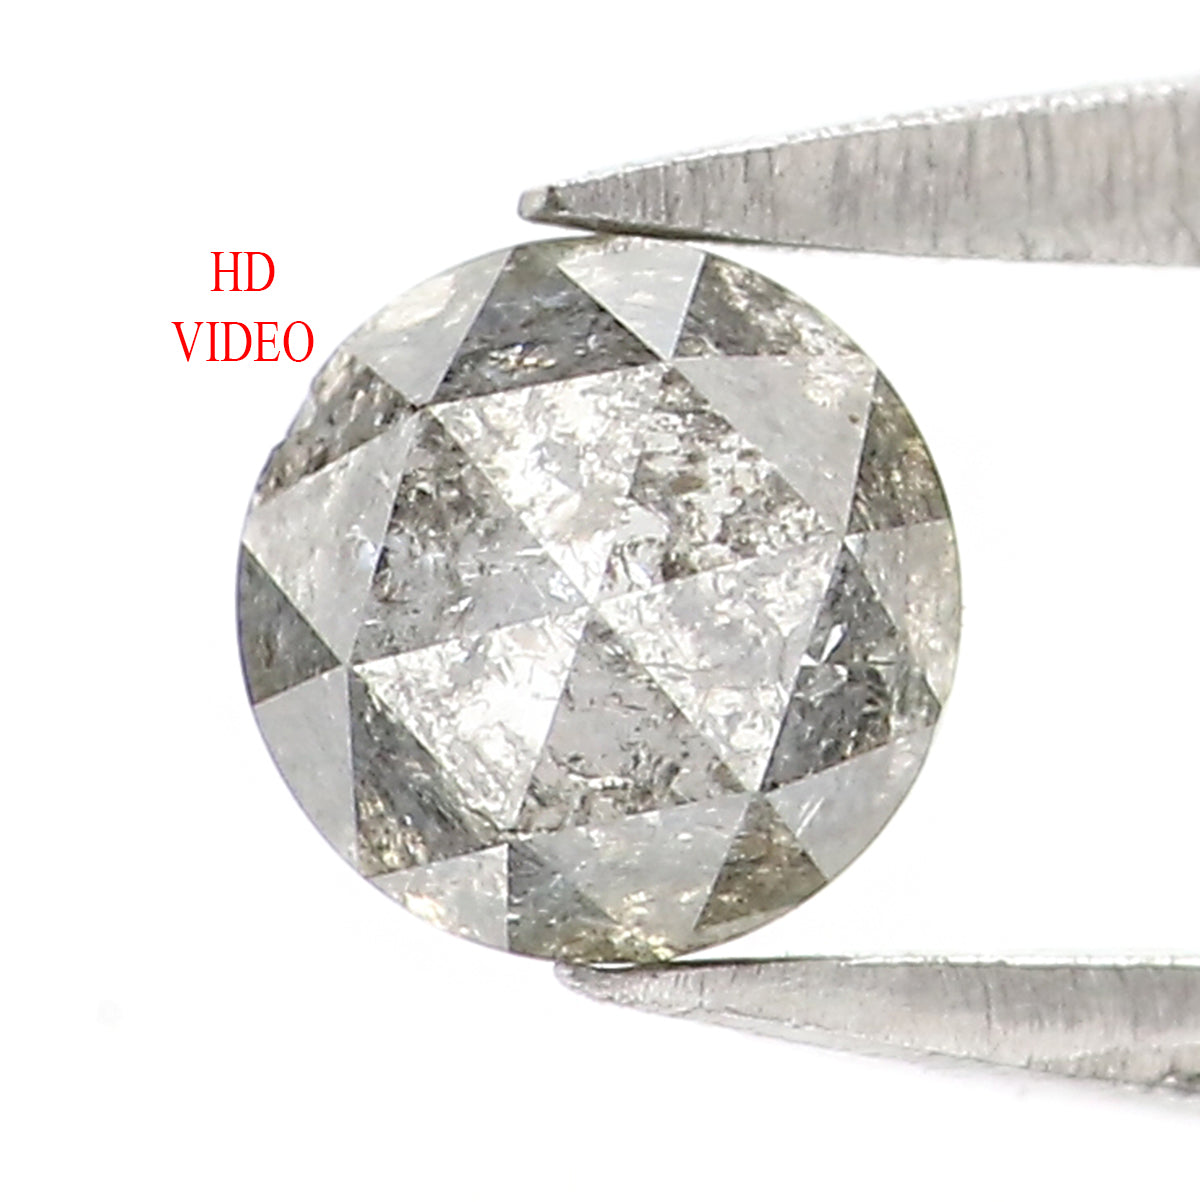 Natural Loose Round Rose Cut Diamond, Salt And Pepper Round Diamond, Natural Loose Diamond, Rose Cut Diamond, 0.56 CT Round Shape L2808